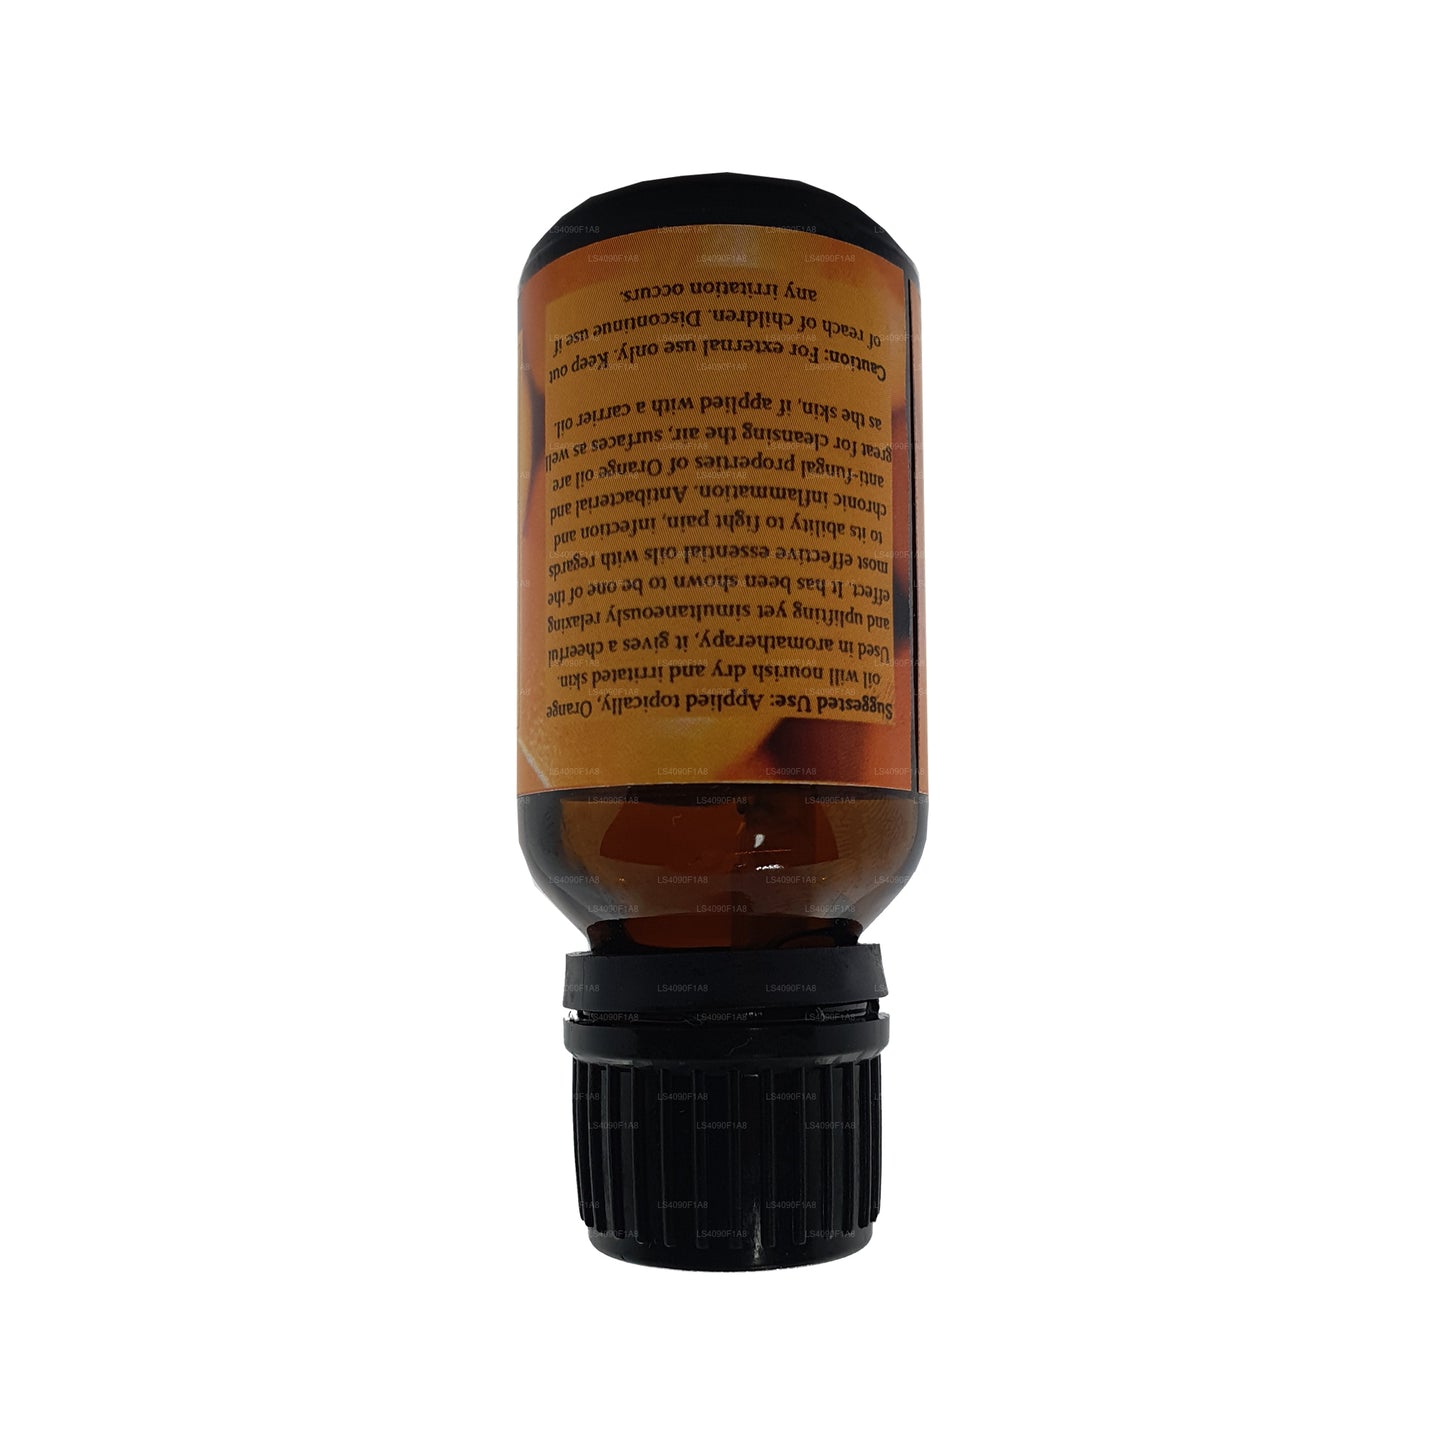 Olio essenziale di arancia Lakpura (15ml)